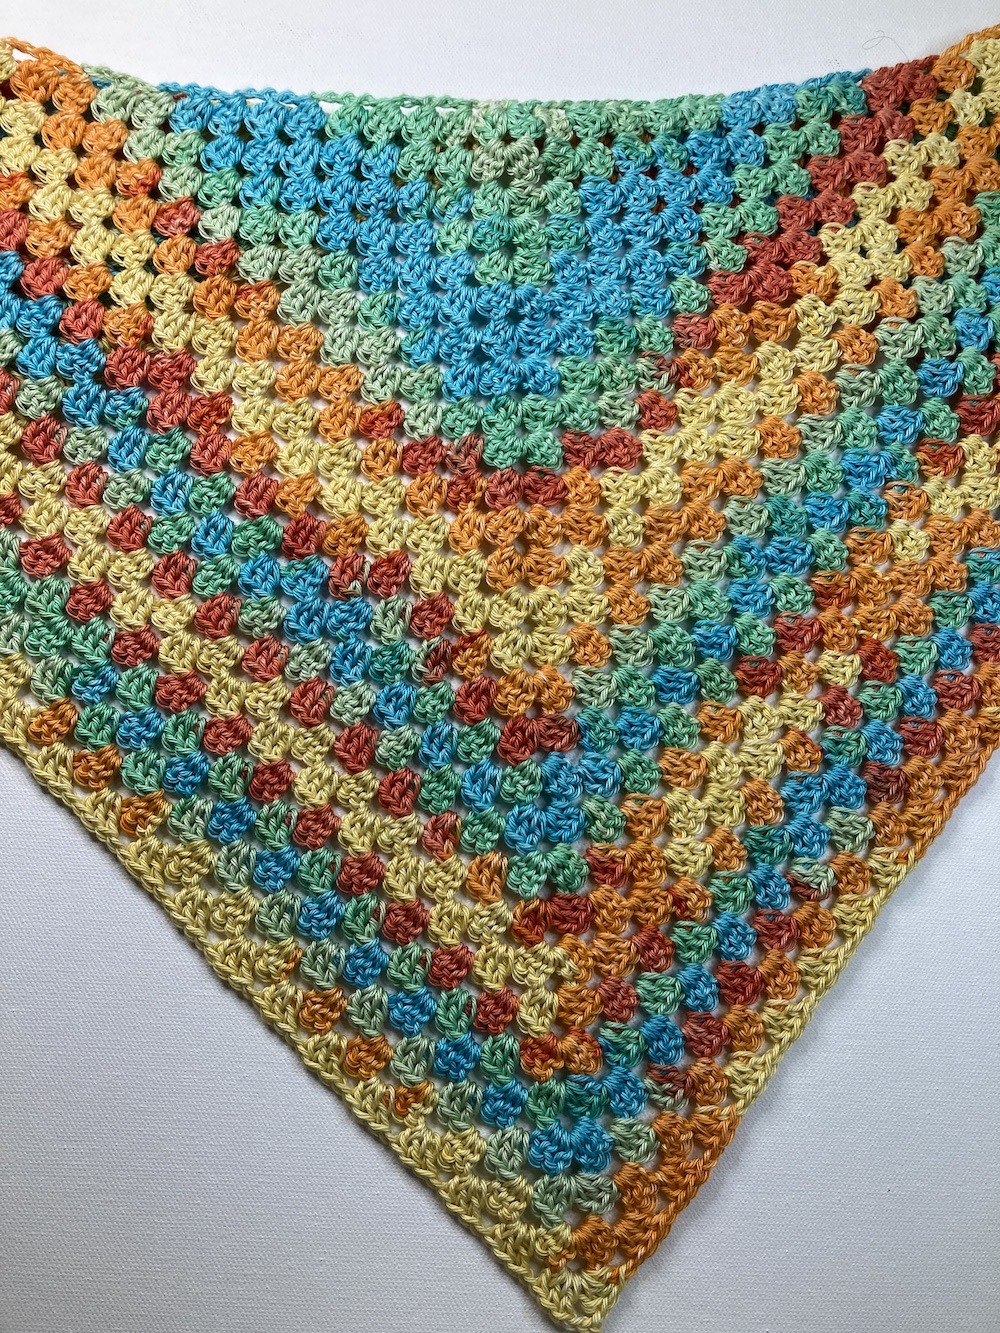 crochet granny stitch shawl in camilla cotton magic yarn